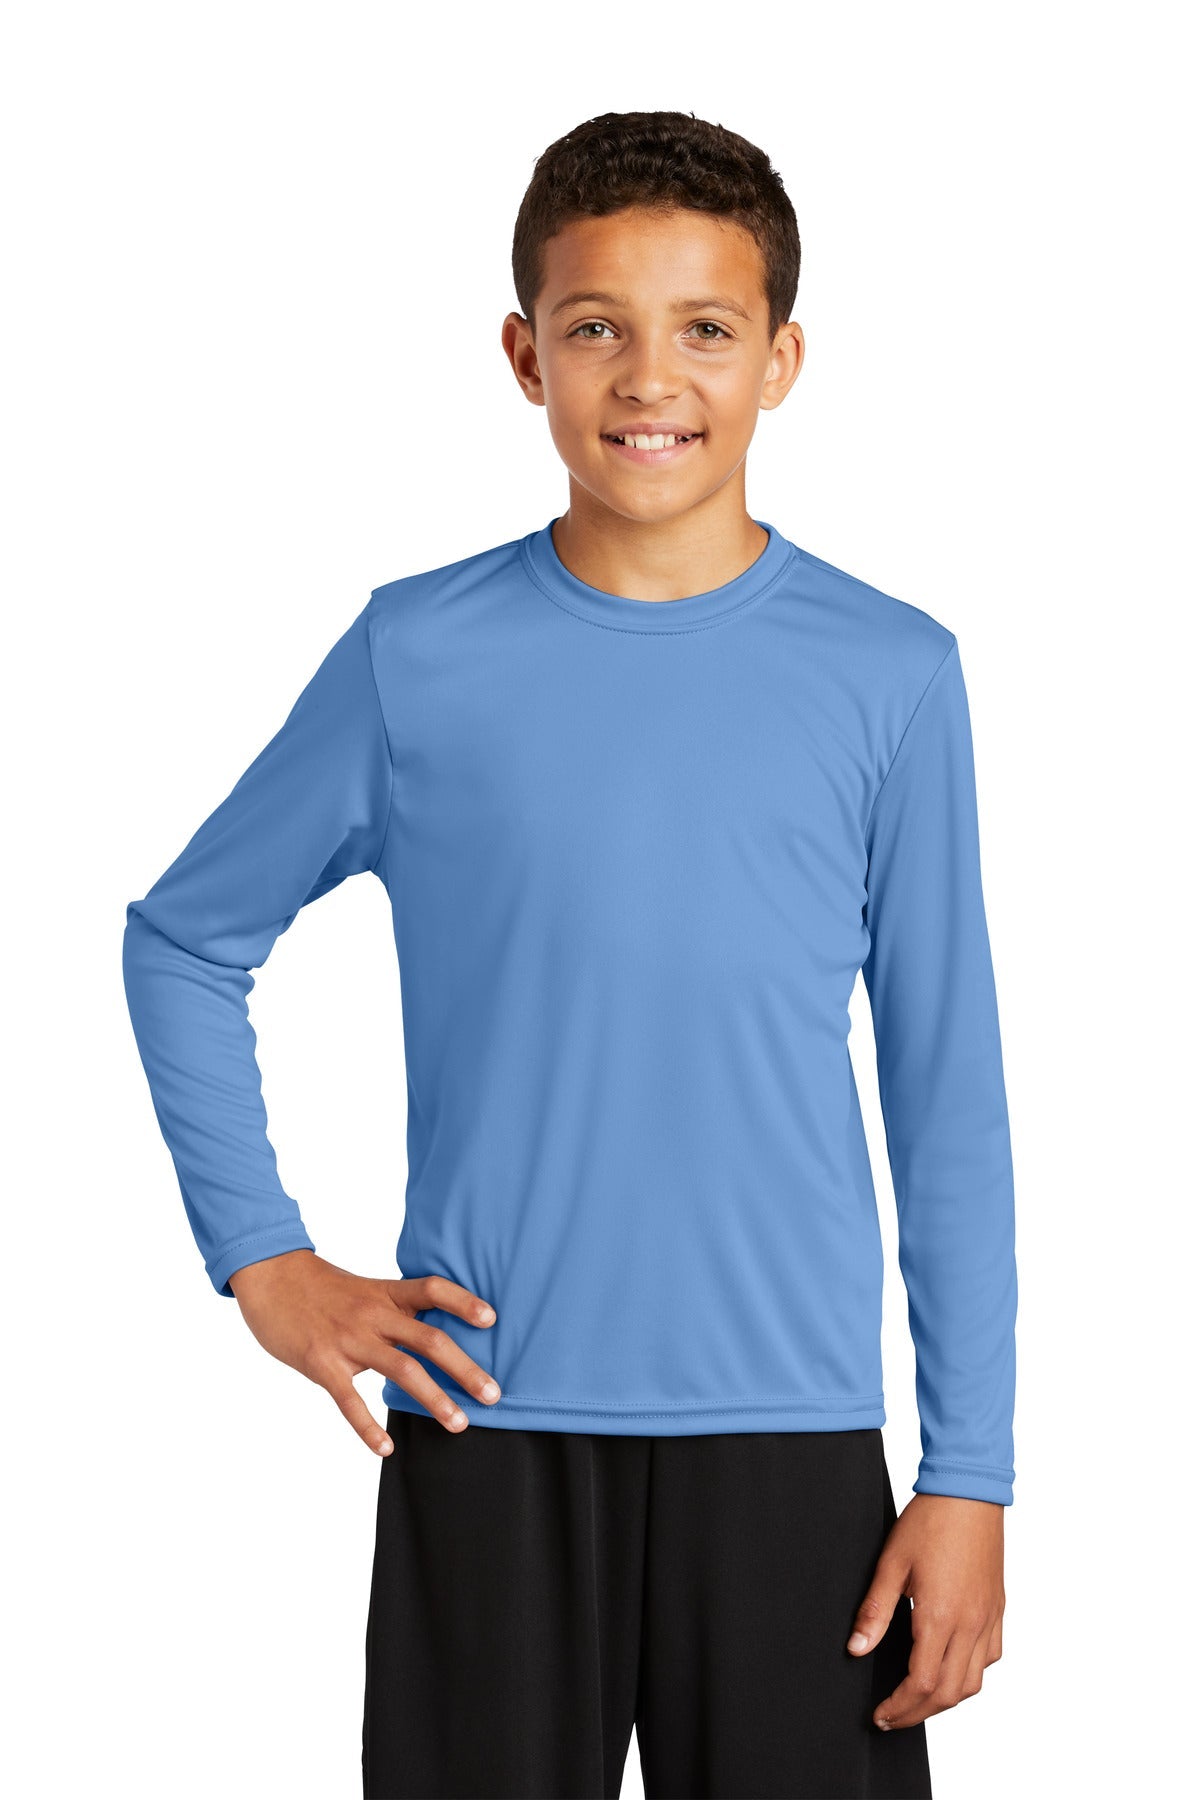 Sport-Tek® Youth Long Sleeve PosiCharge® Competitor™ Tee. YST350LS [Carolina Blue] - DFW Impression